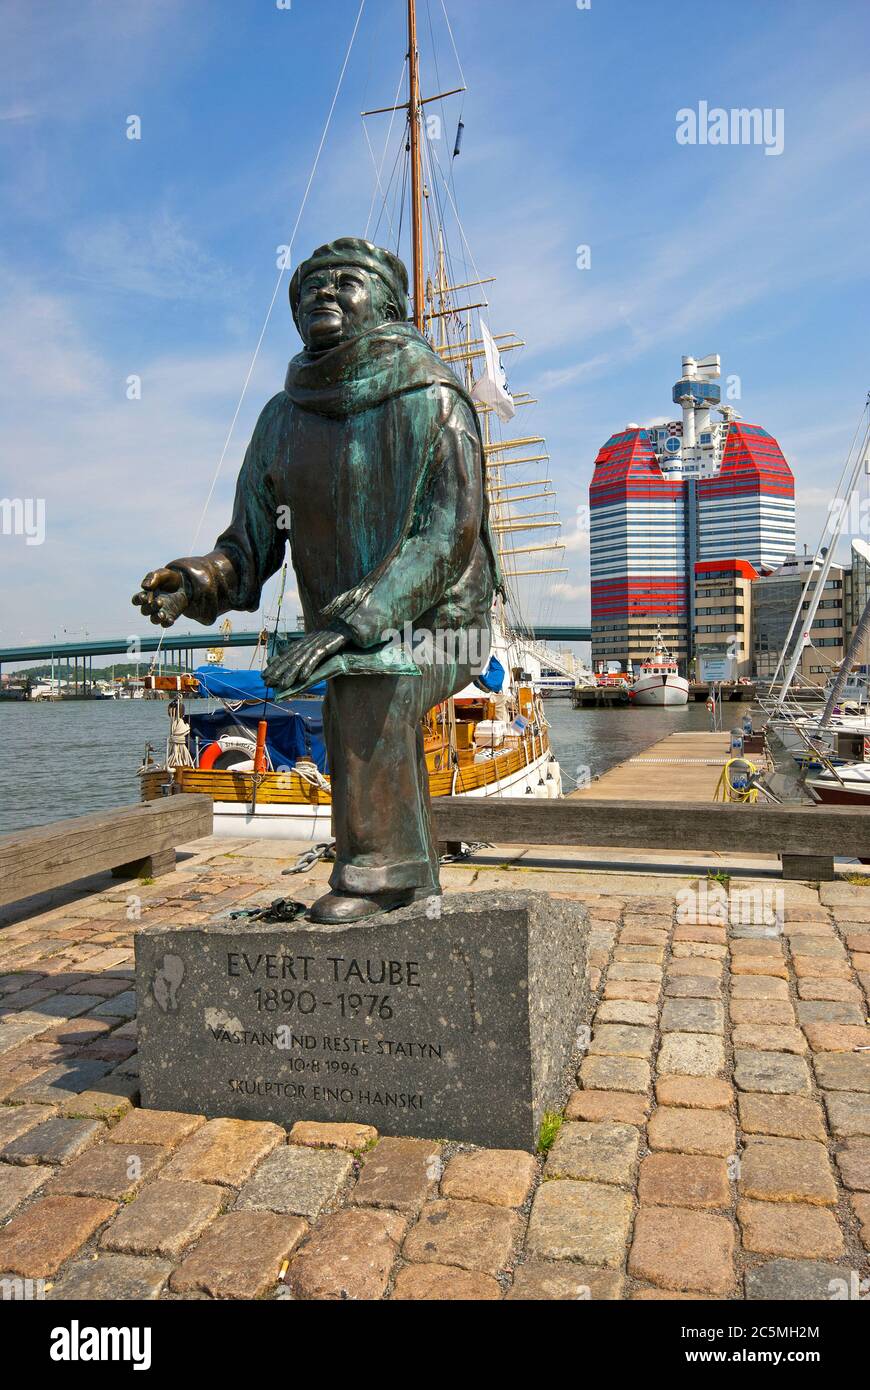 Statue of swedish artist Evert Taube (1890-1976) by the sculptor Eino Hanski, Gothenburg Harbour (in the background The Lipstick building), Sweden Stock Photo